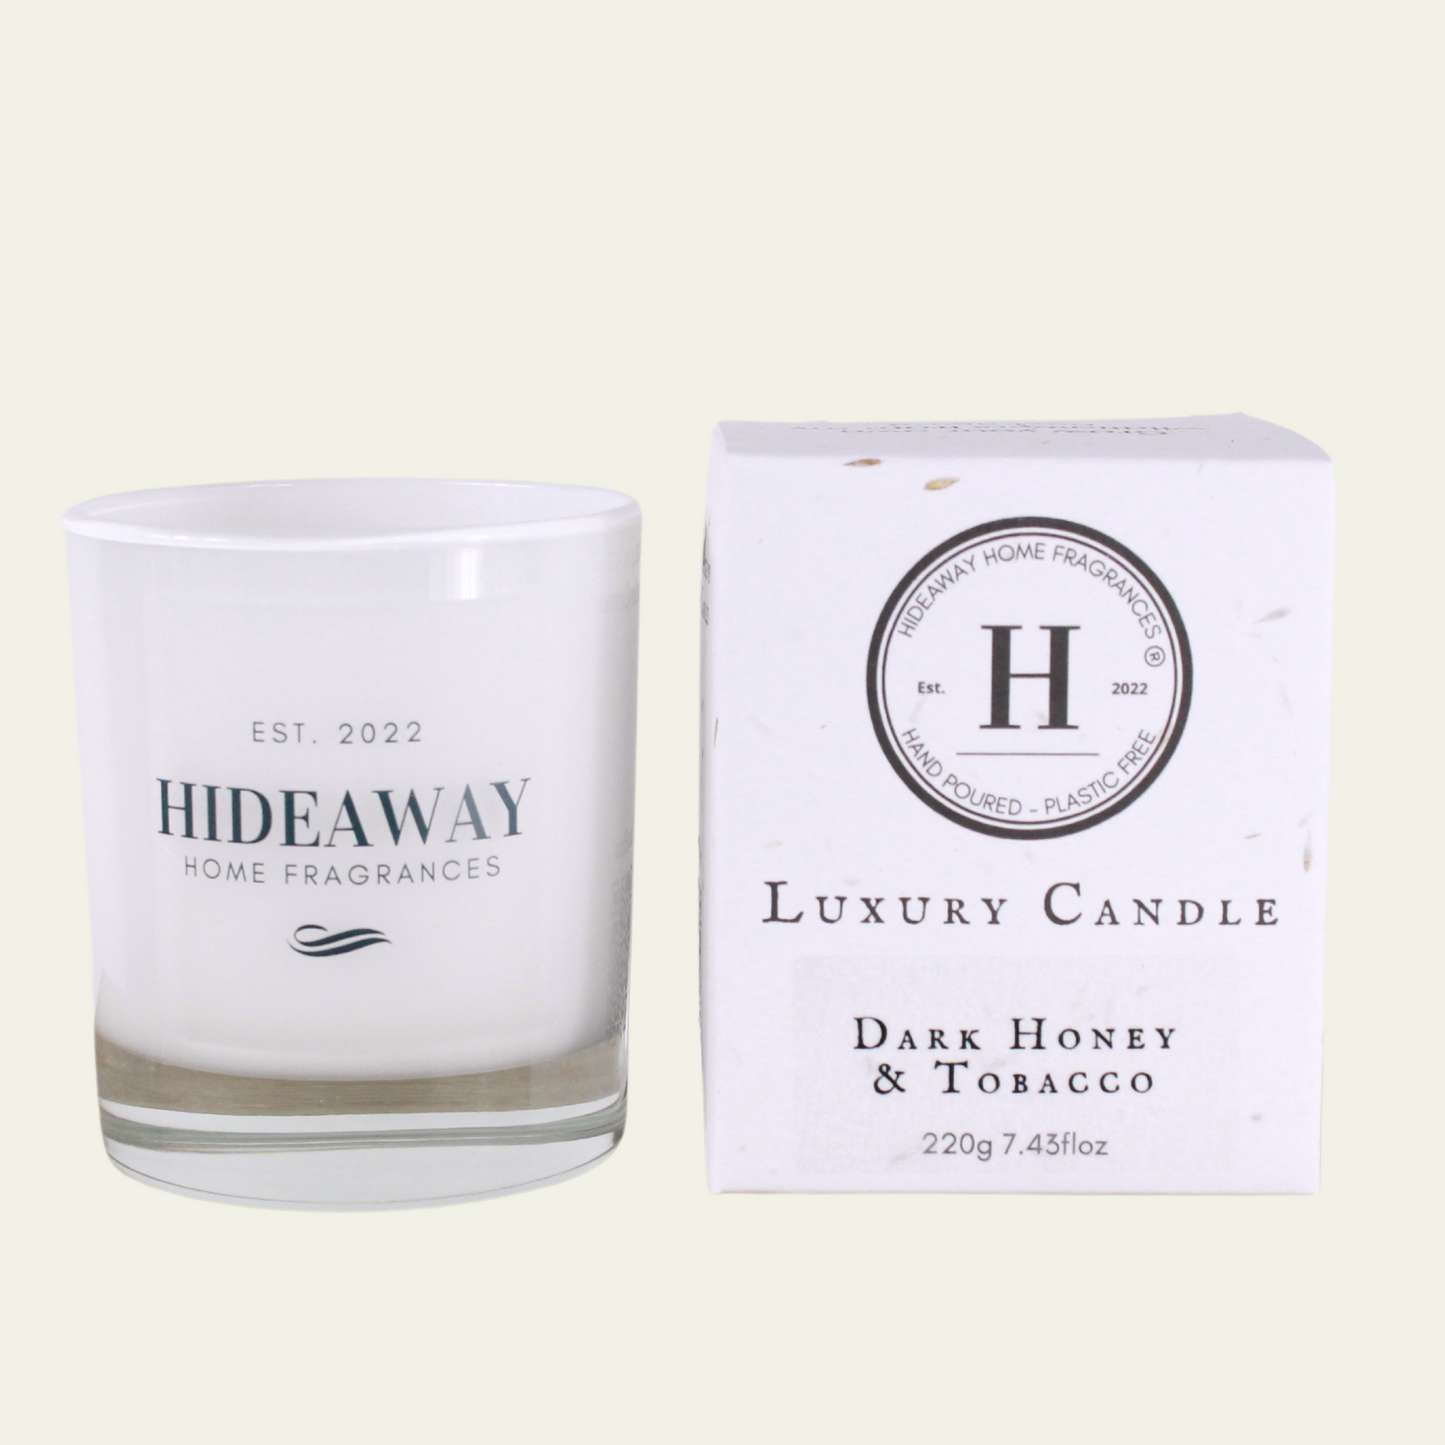 Dark Honey & Tobacco Luxury Candle - Hideaway Home Fragrances